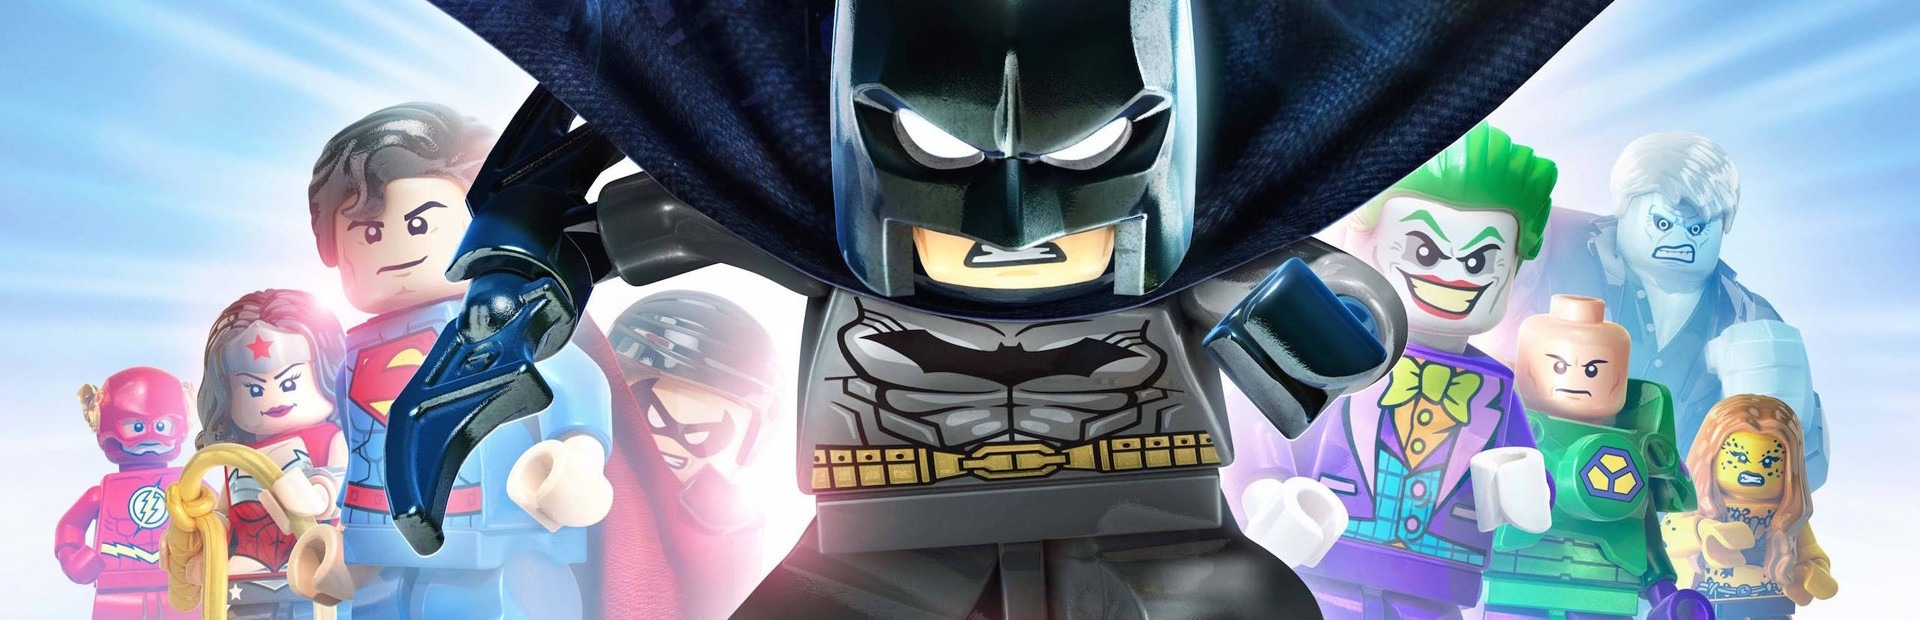 Batmobile™: Batman™ vs. The Joker™ Chase 76224, Batman™